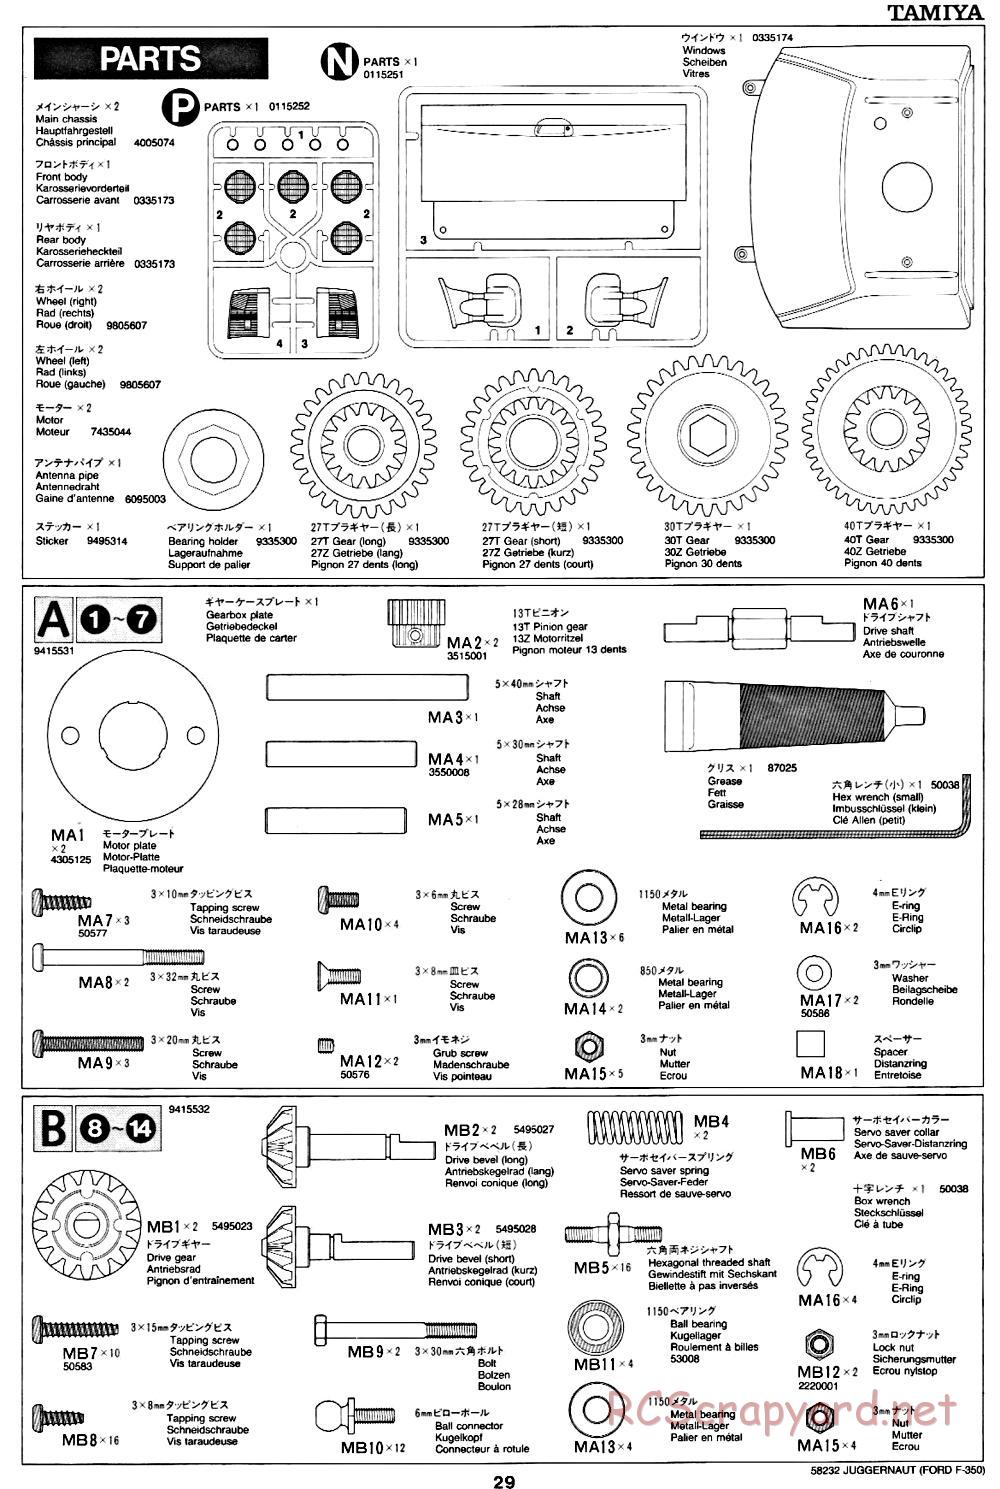 Tamiya - Juggernaut Chassis - Manual - Page 29